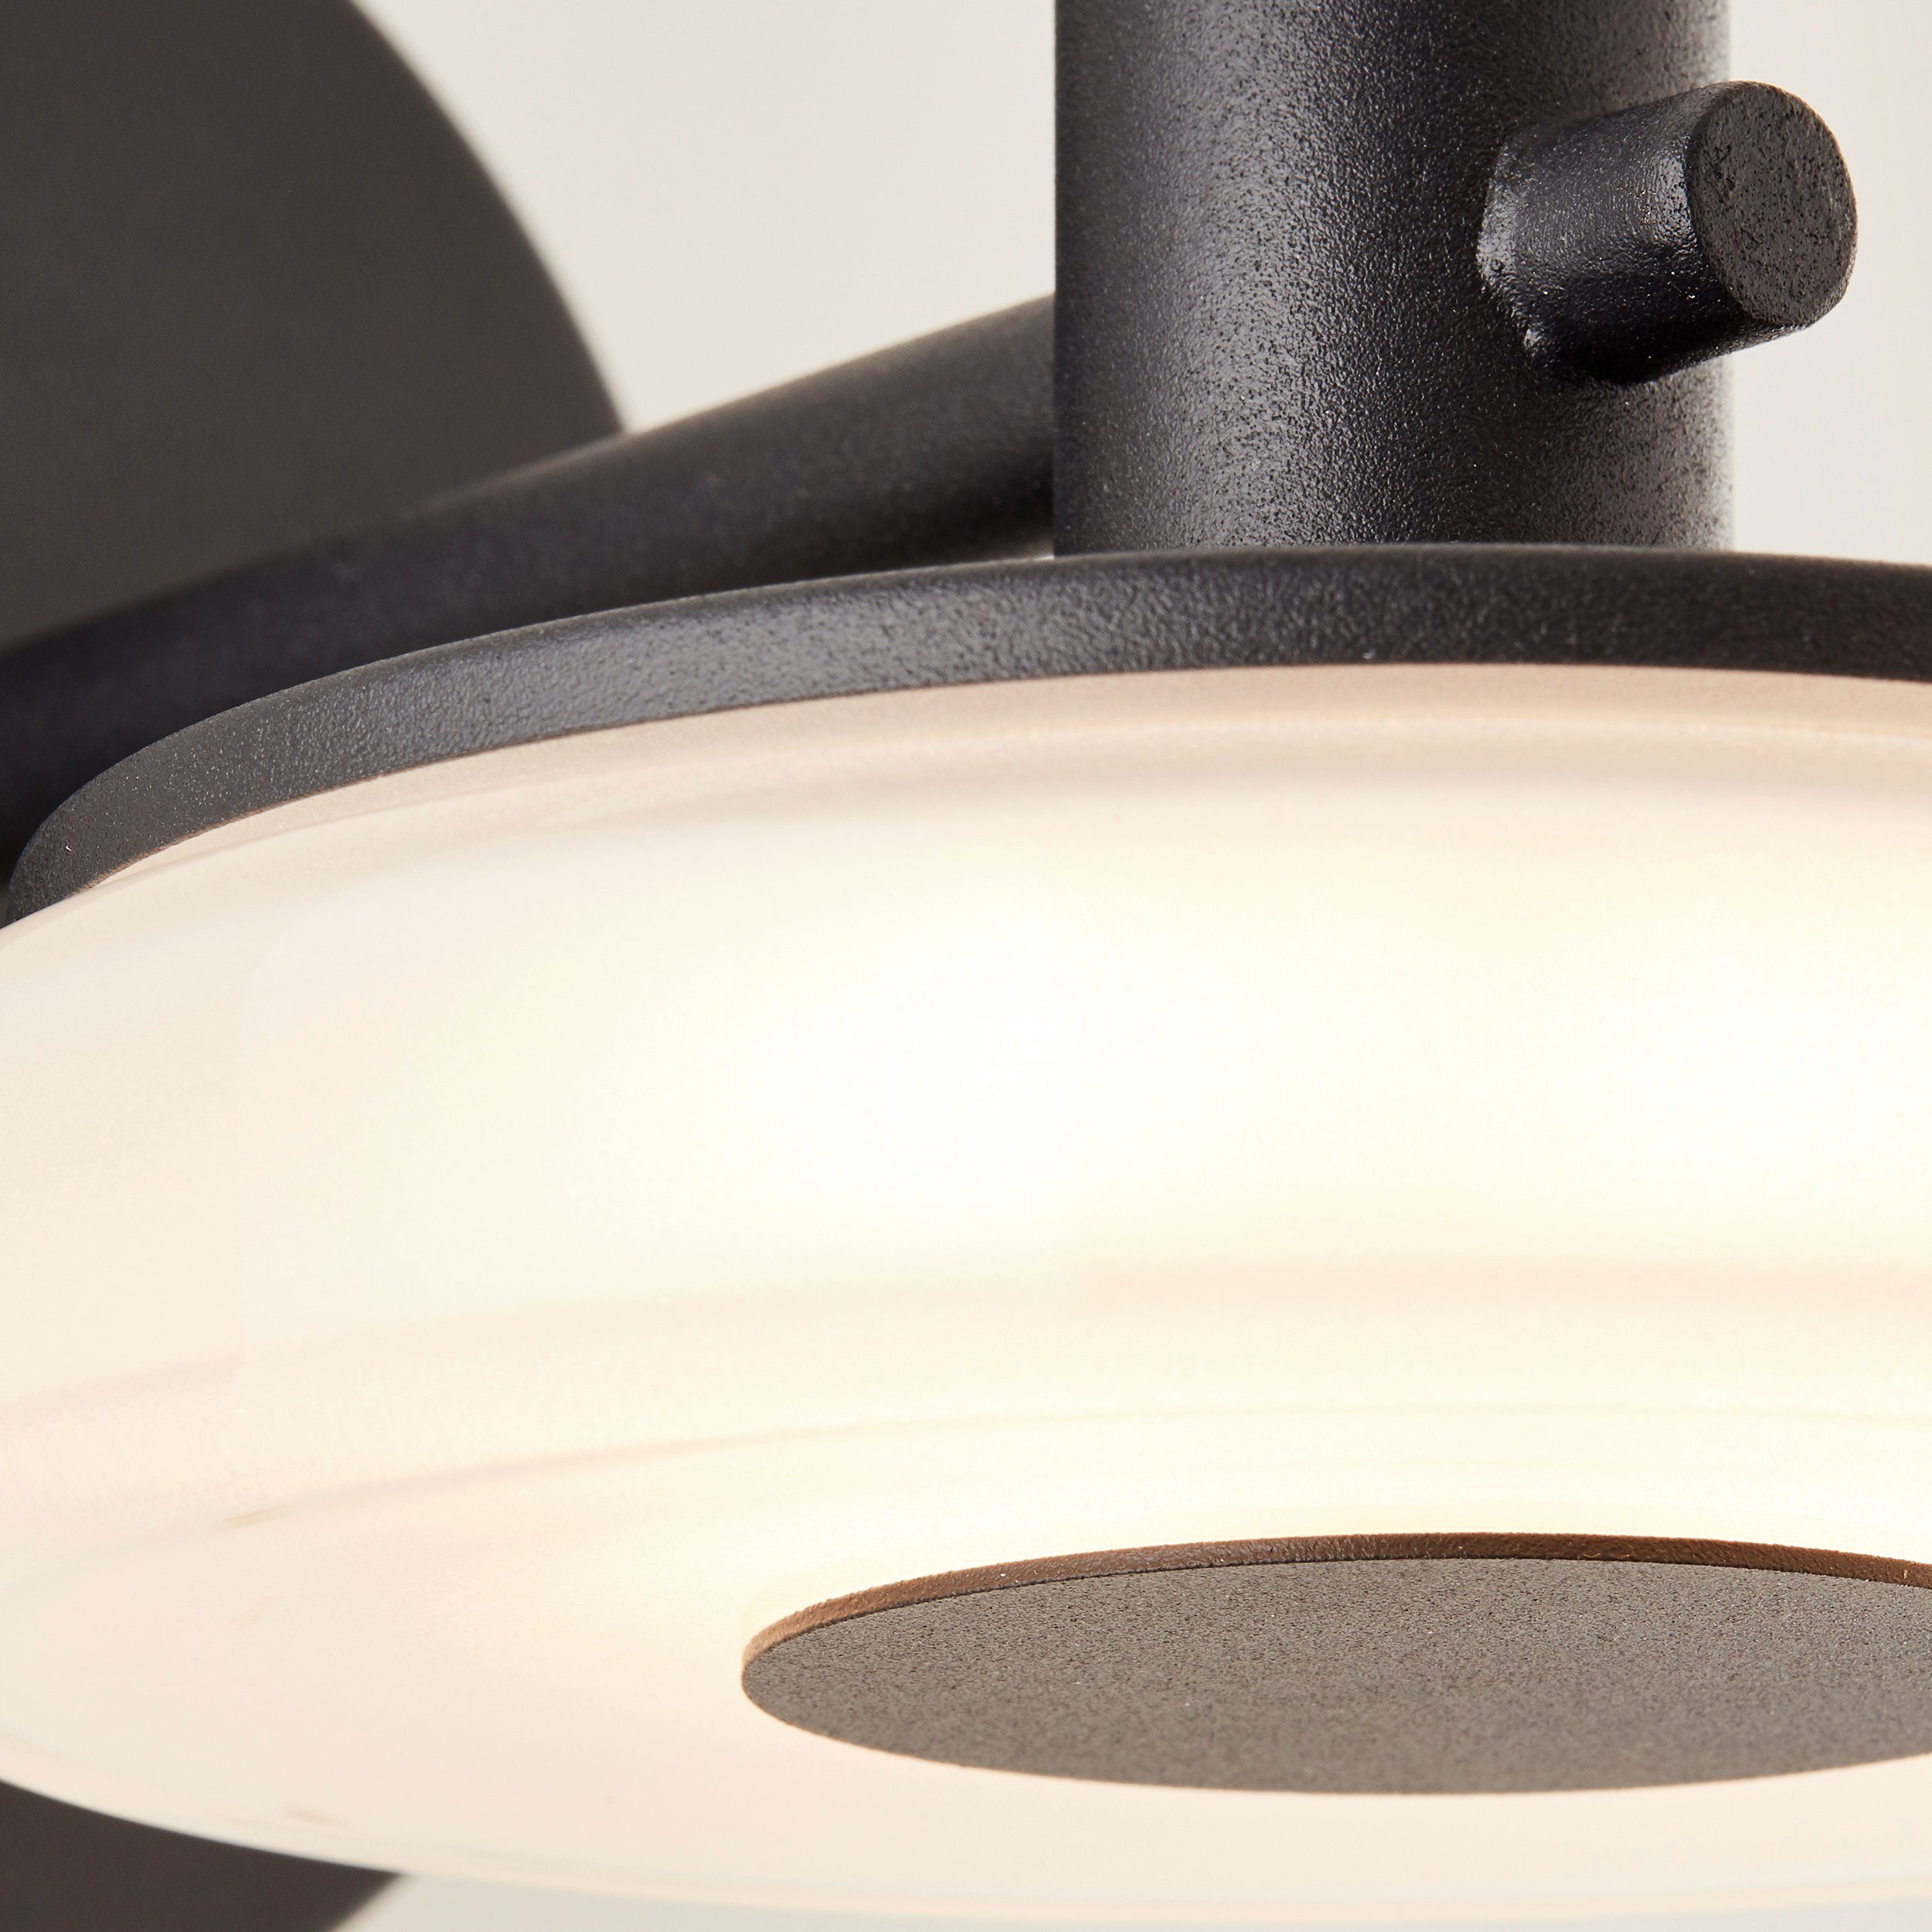 Seaham, LED 1x Seaham integrie Brilliant sand Metall/Glas, LED Außenwandleuchte Außen-Wandleuchte schwarz, LED